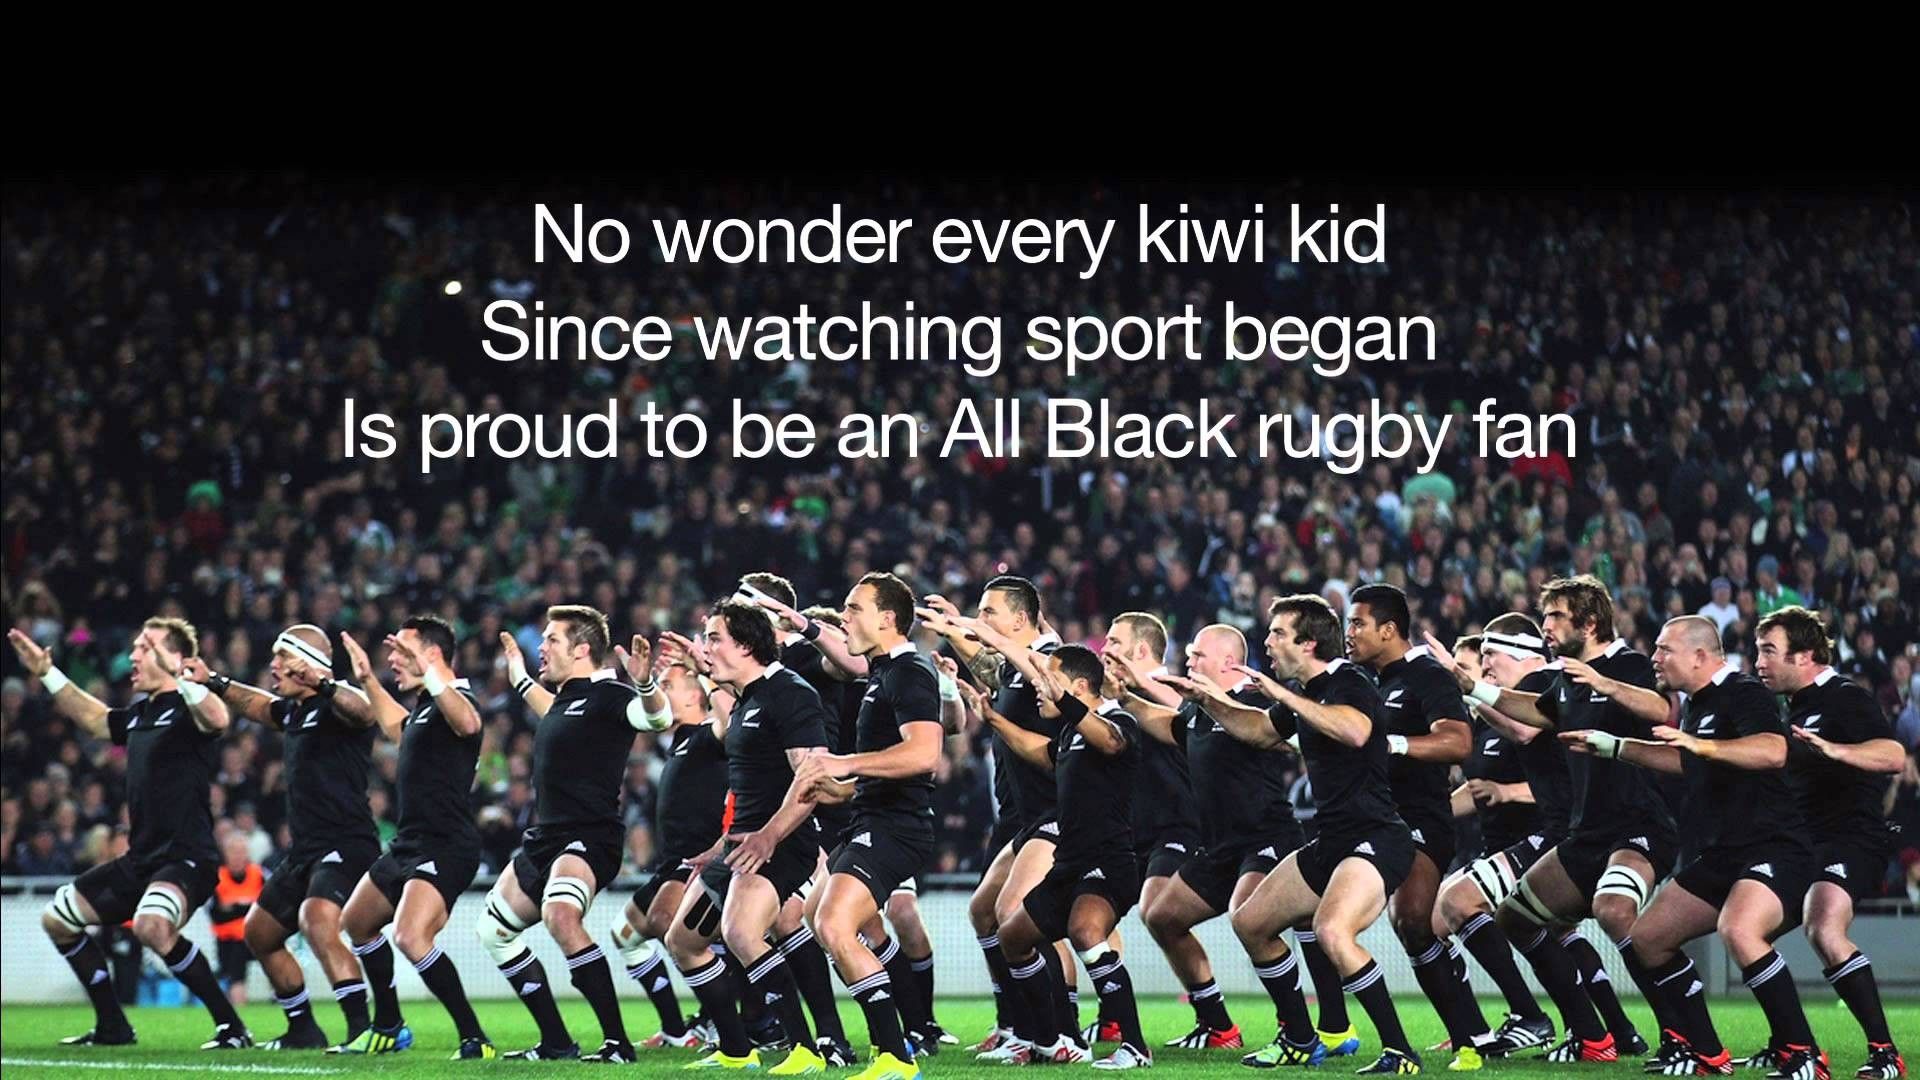 All Black Rugby Fan Wallpaper Desktop Image Background Photo